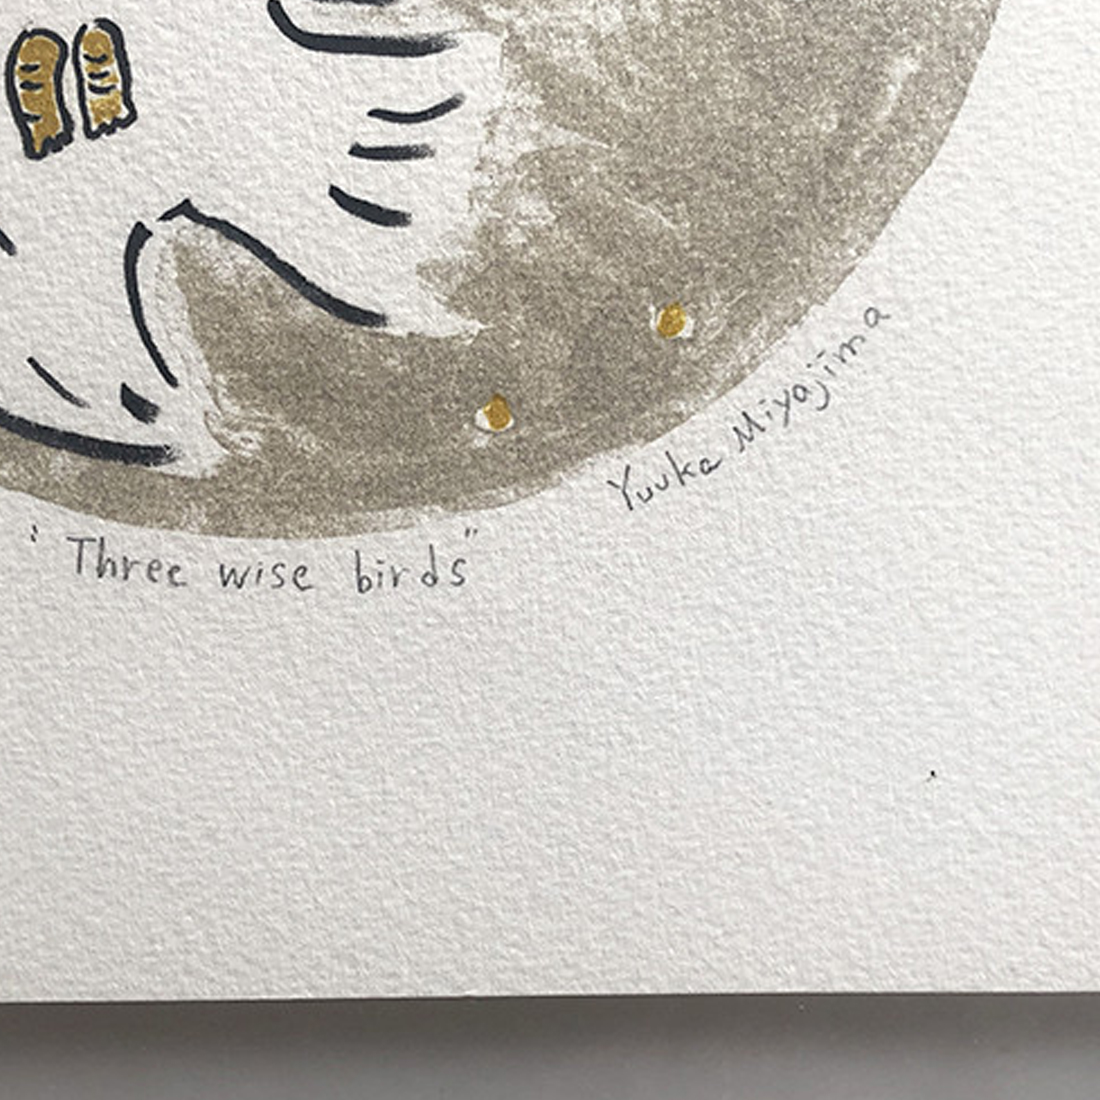 作品「Three wise birds」